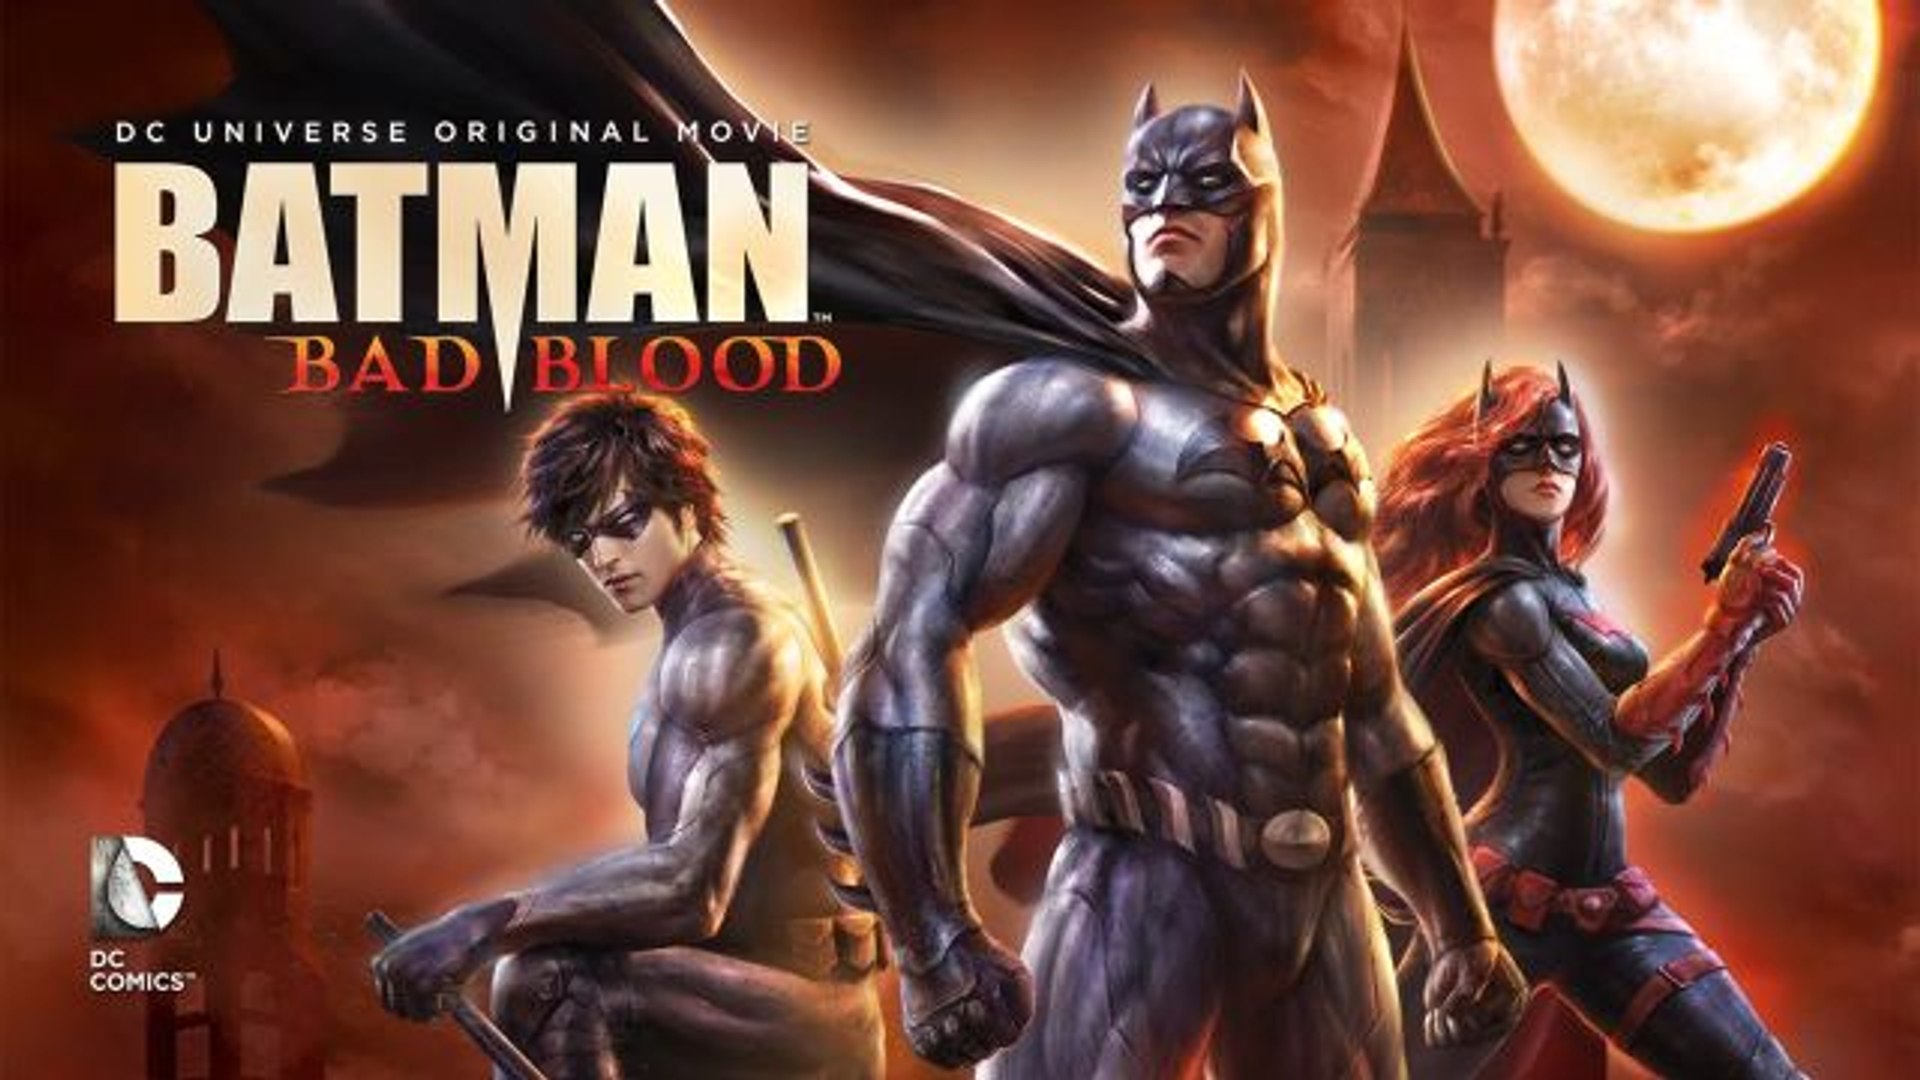 BATMAN BAD BLOOD [HD] - video Dailymotion